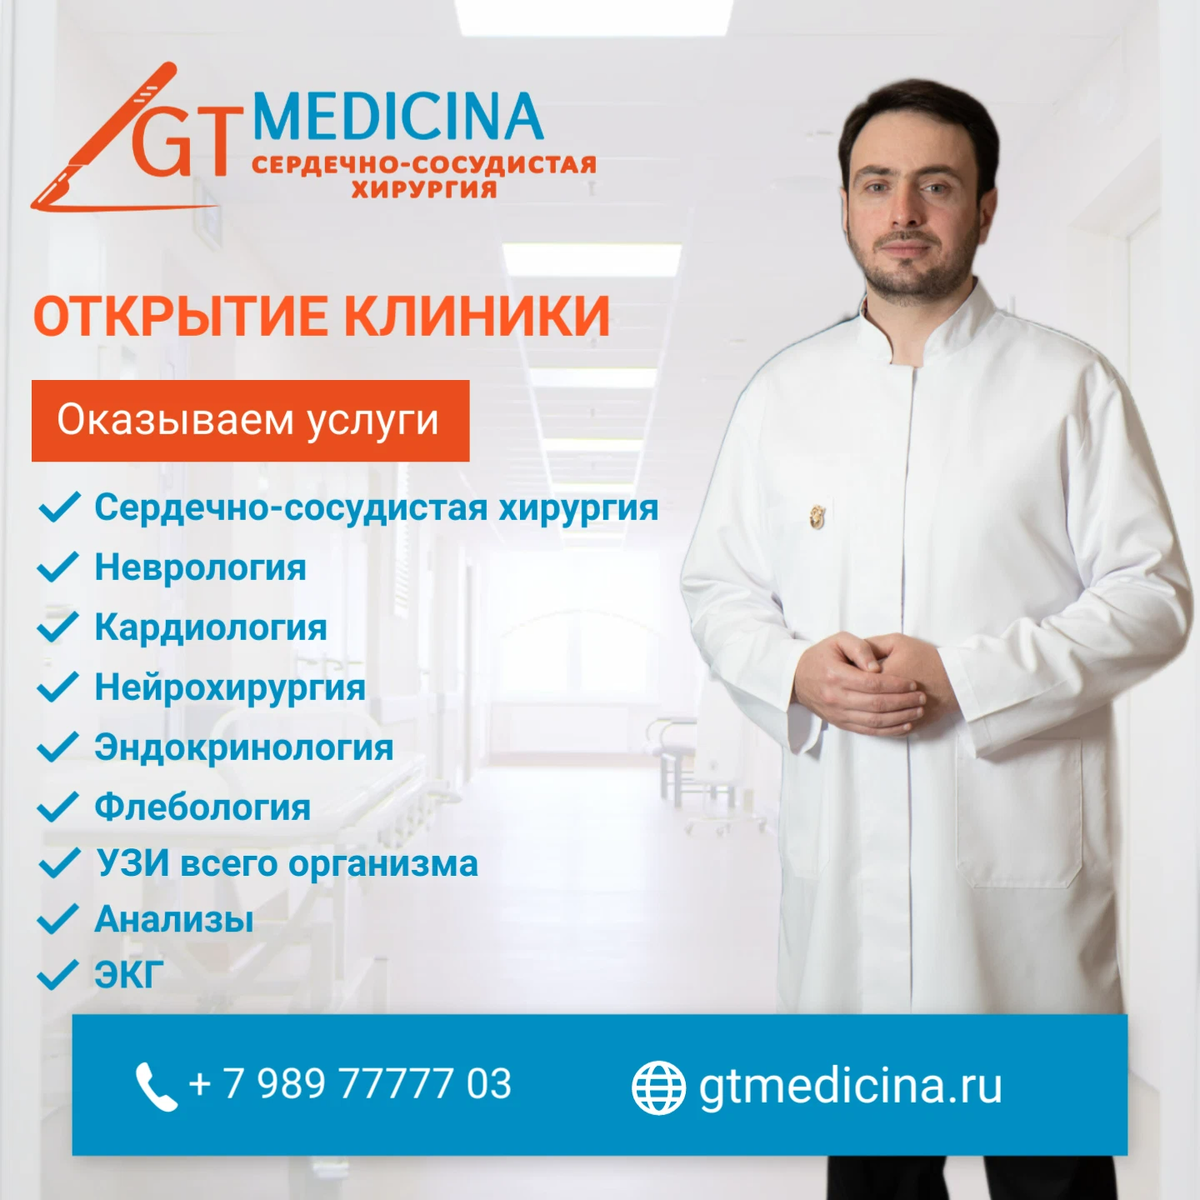 Your Clinic Краснодар врачи. Медицина Краснодара. Gt medicina Краснодар руководитель компании. Клиника Краснодар.